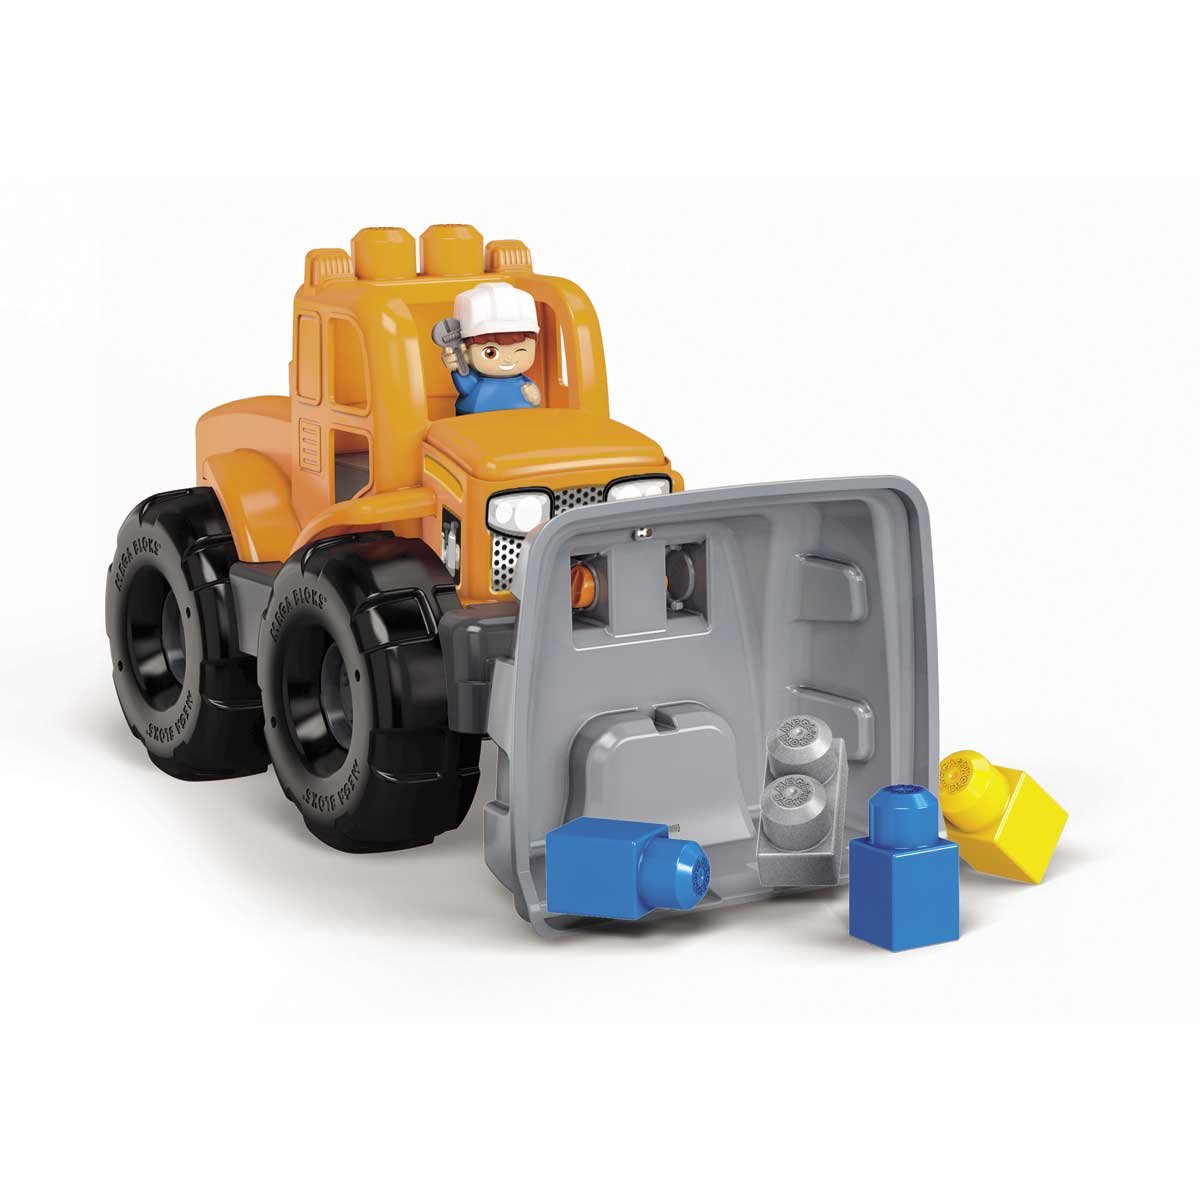 Mega Blocks Camión de Volteo Transformable Mattel